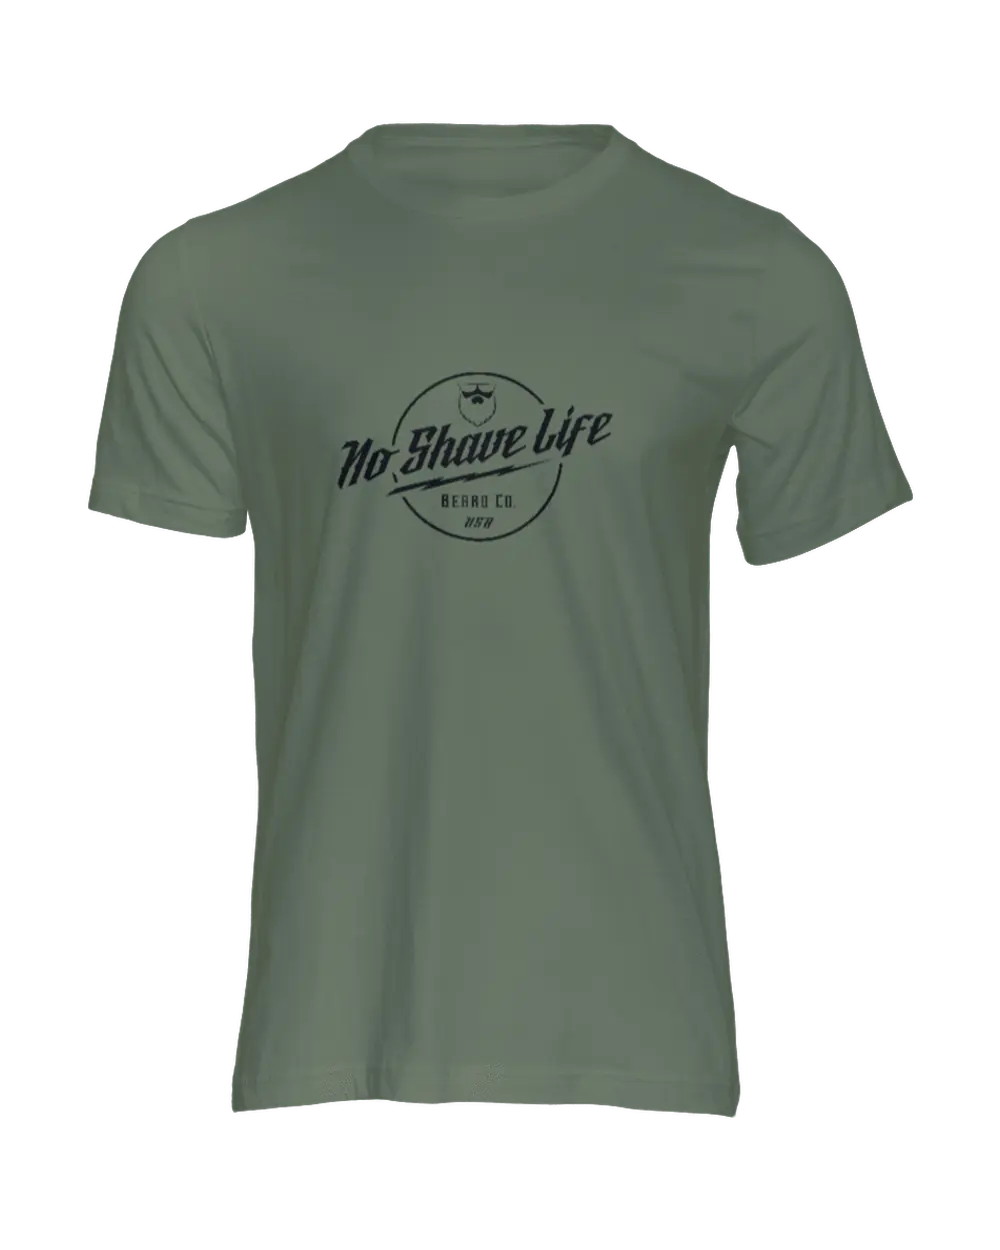 No Shave Life Crate Green T-Shirt|T-Shirt